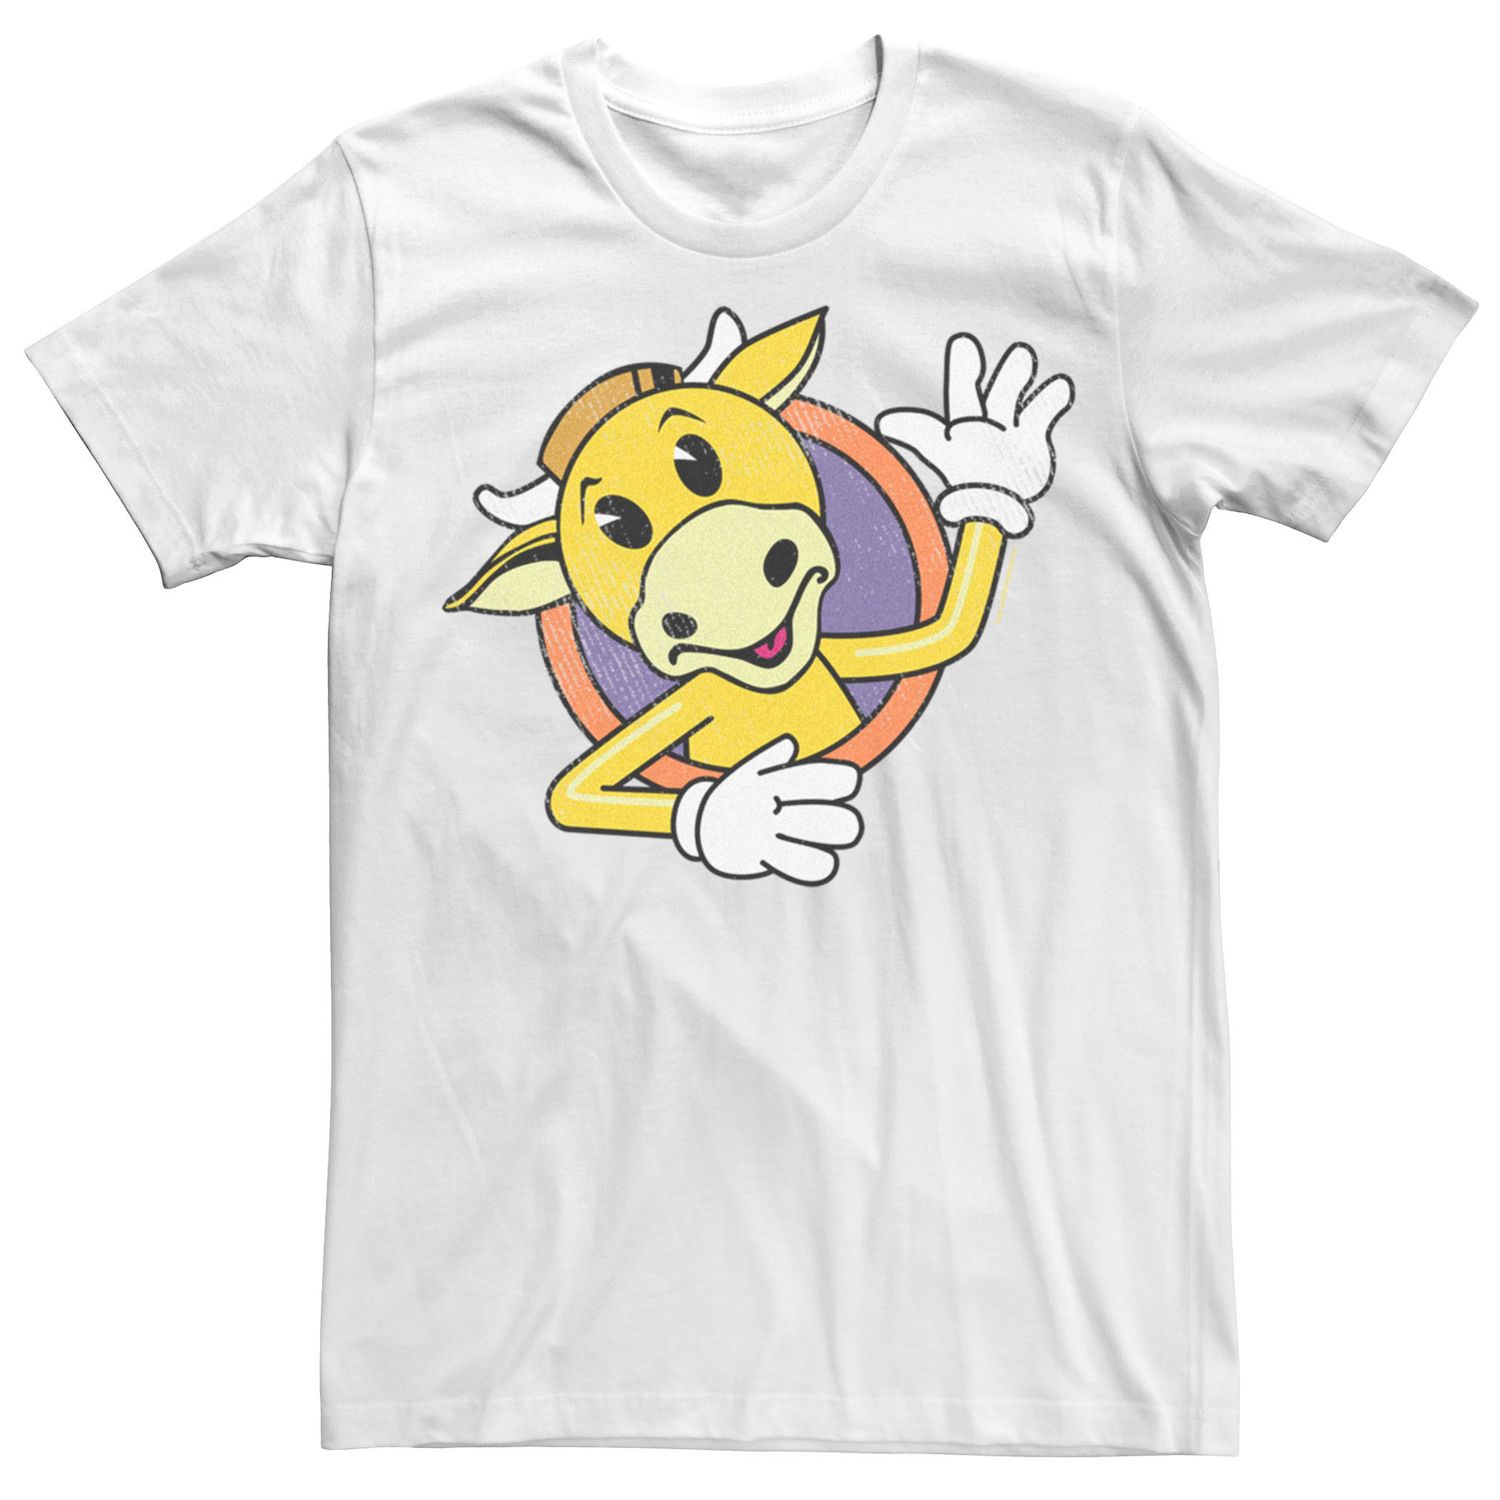 printio лонгслив джей и молчаливый боб Мужская футболка с развевающимся логотипом Jay And Silent Bob Mooby's Licensed Character